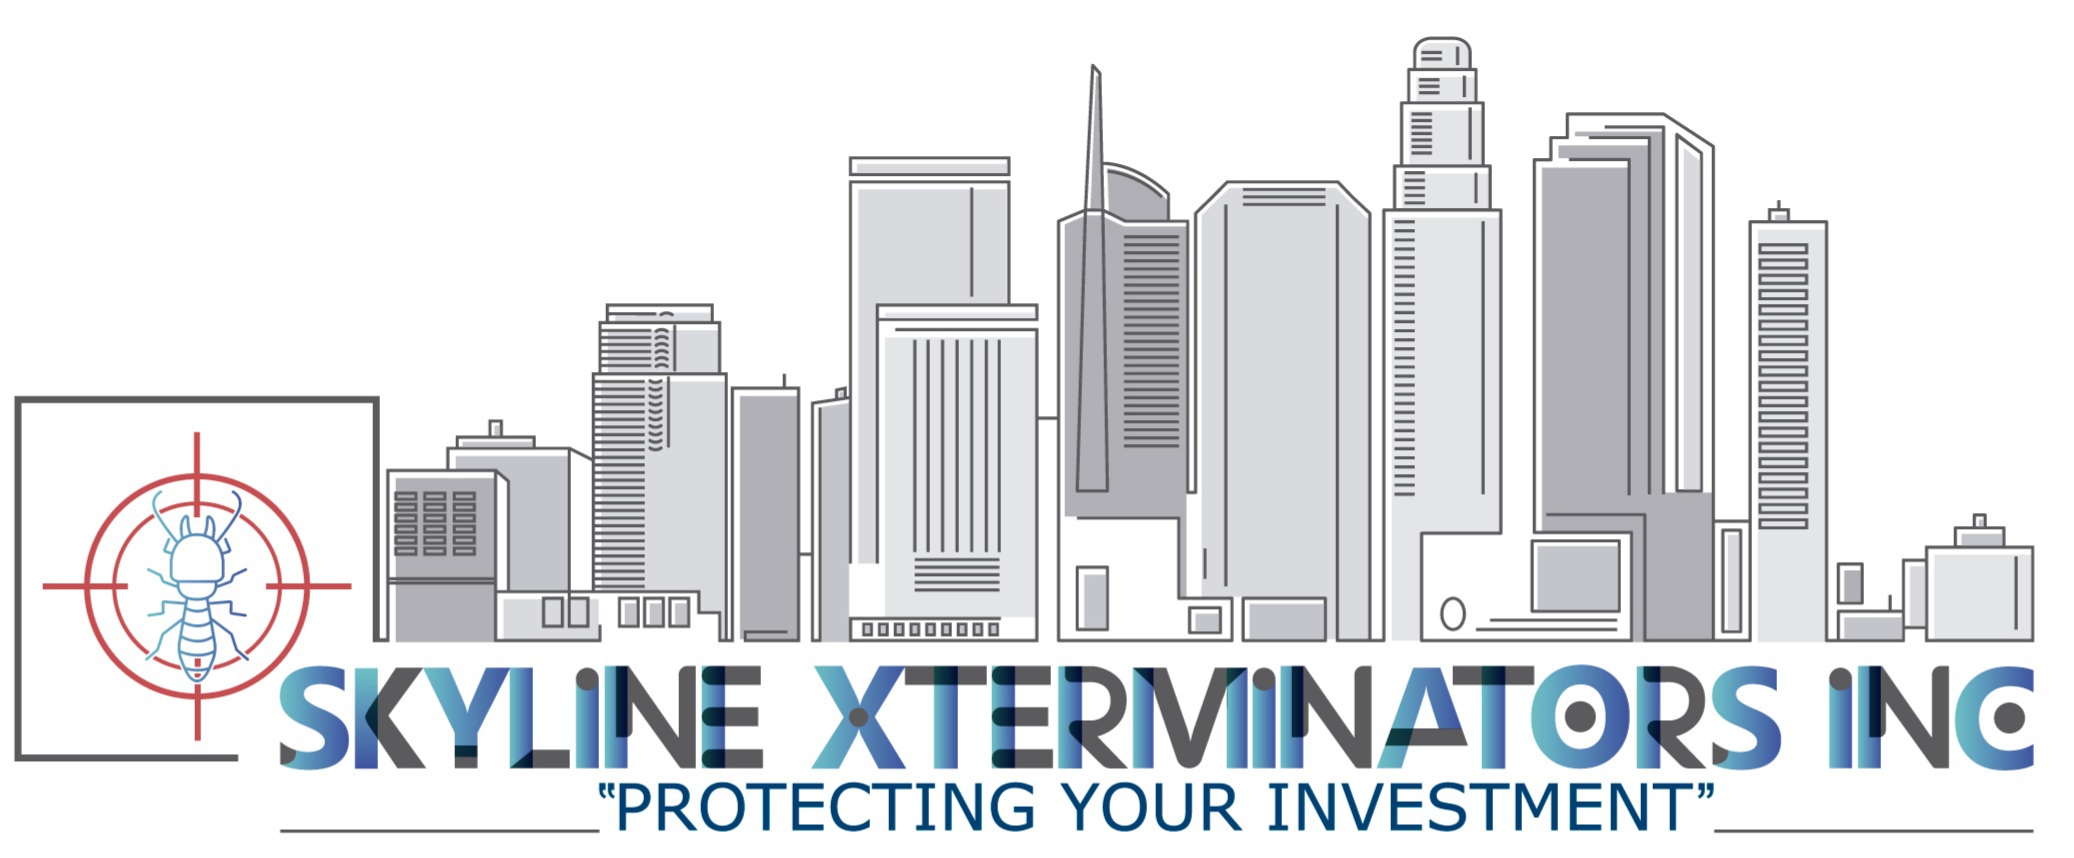 Skyline Xterminators, Inc. Logo